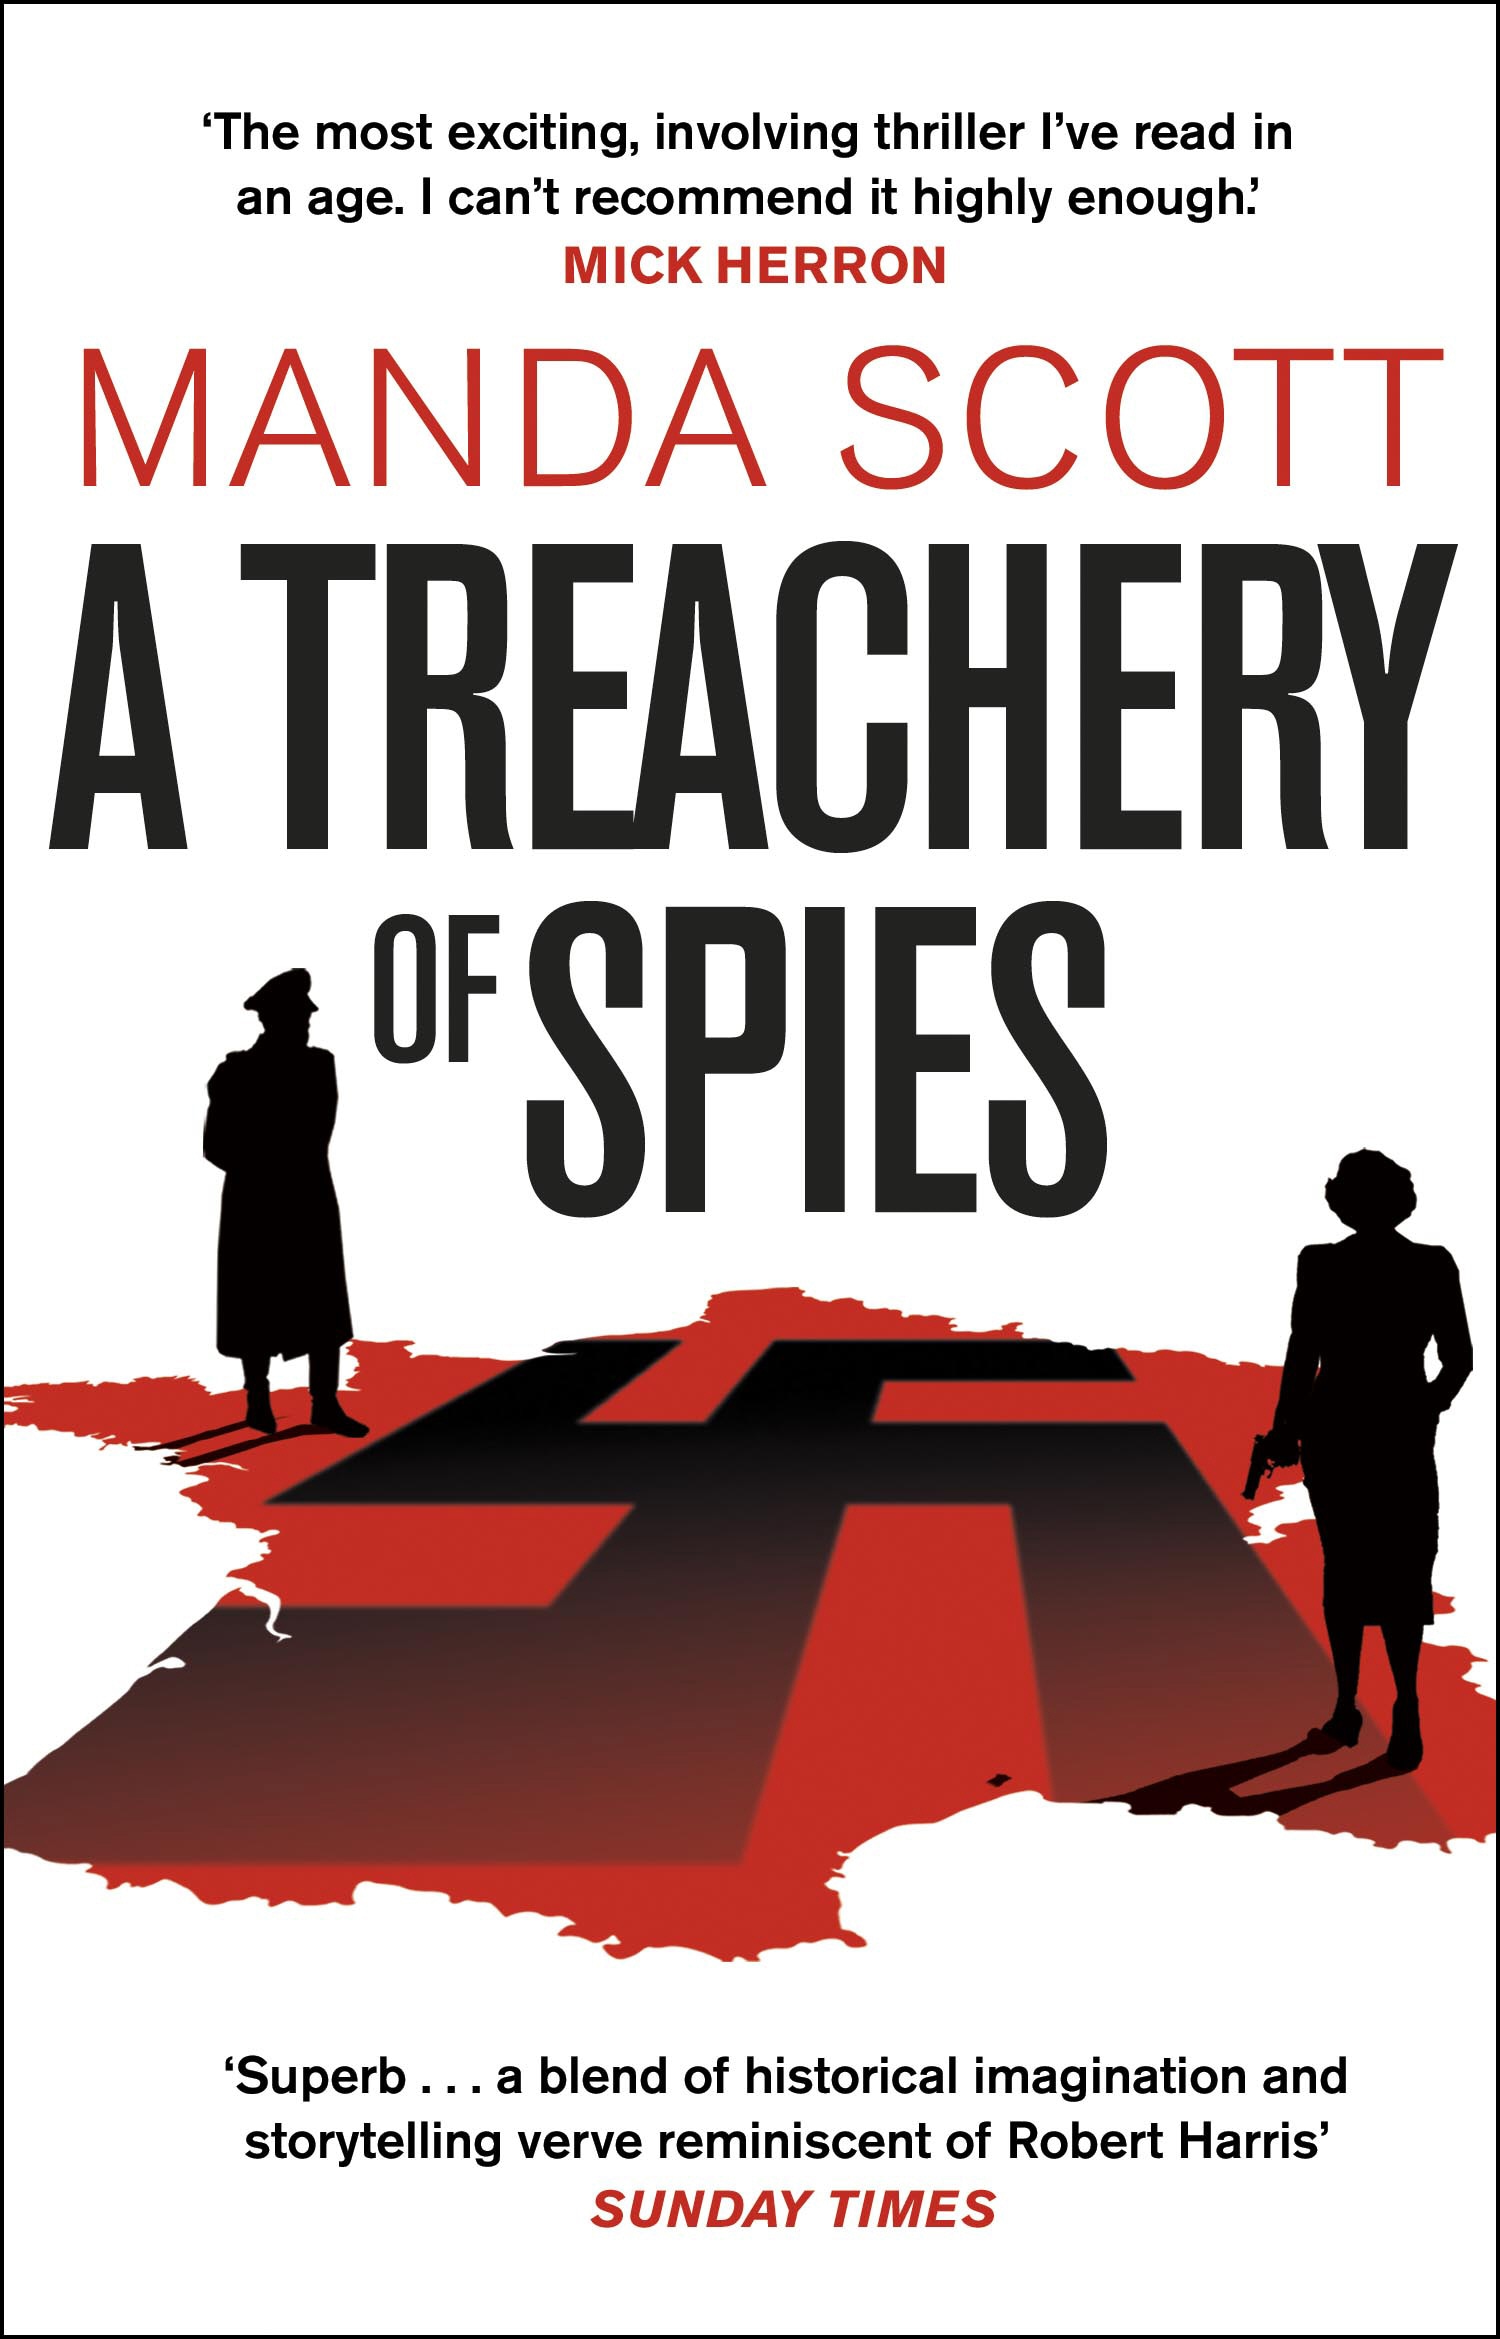 Book “A Treachery of Spies” by Manda Scott — August 8, 2019